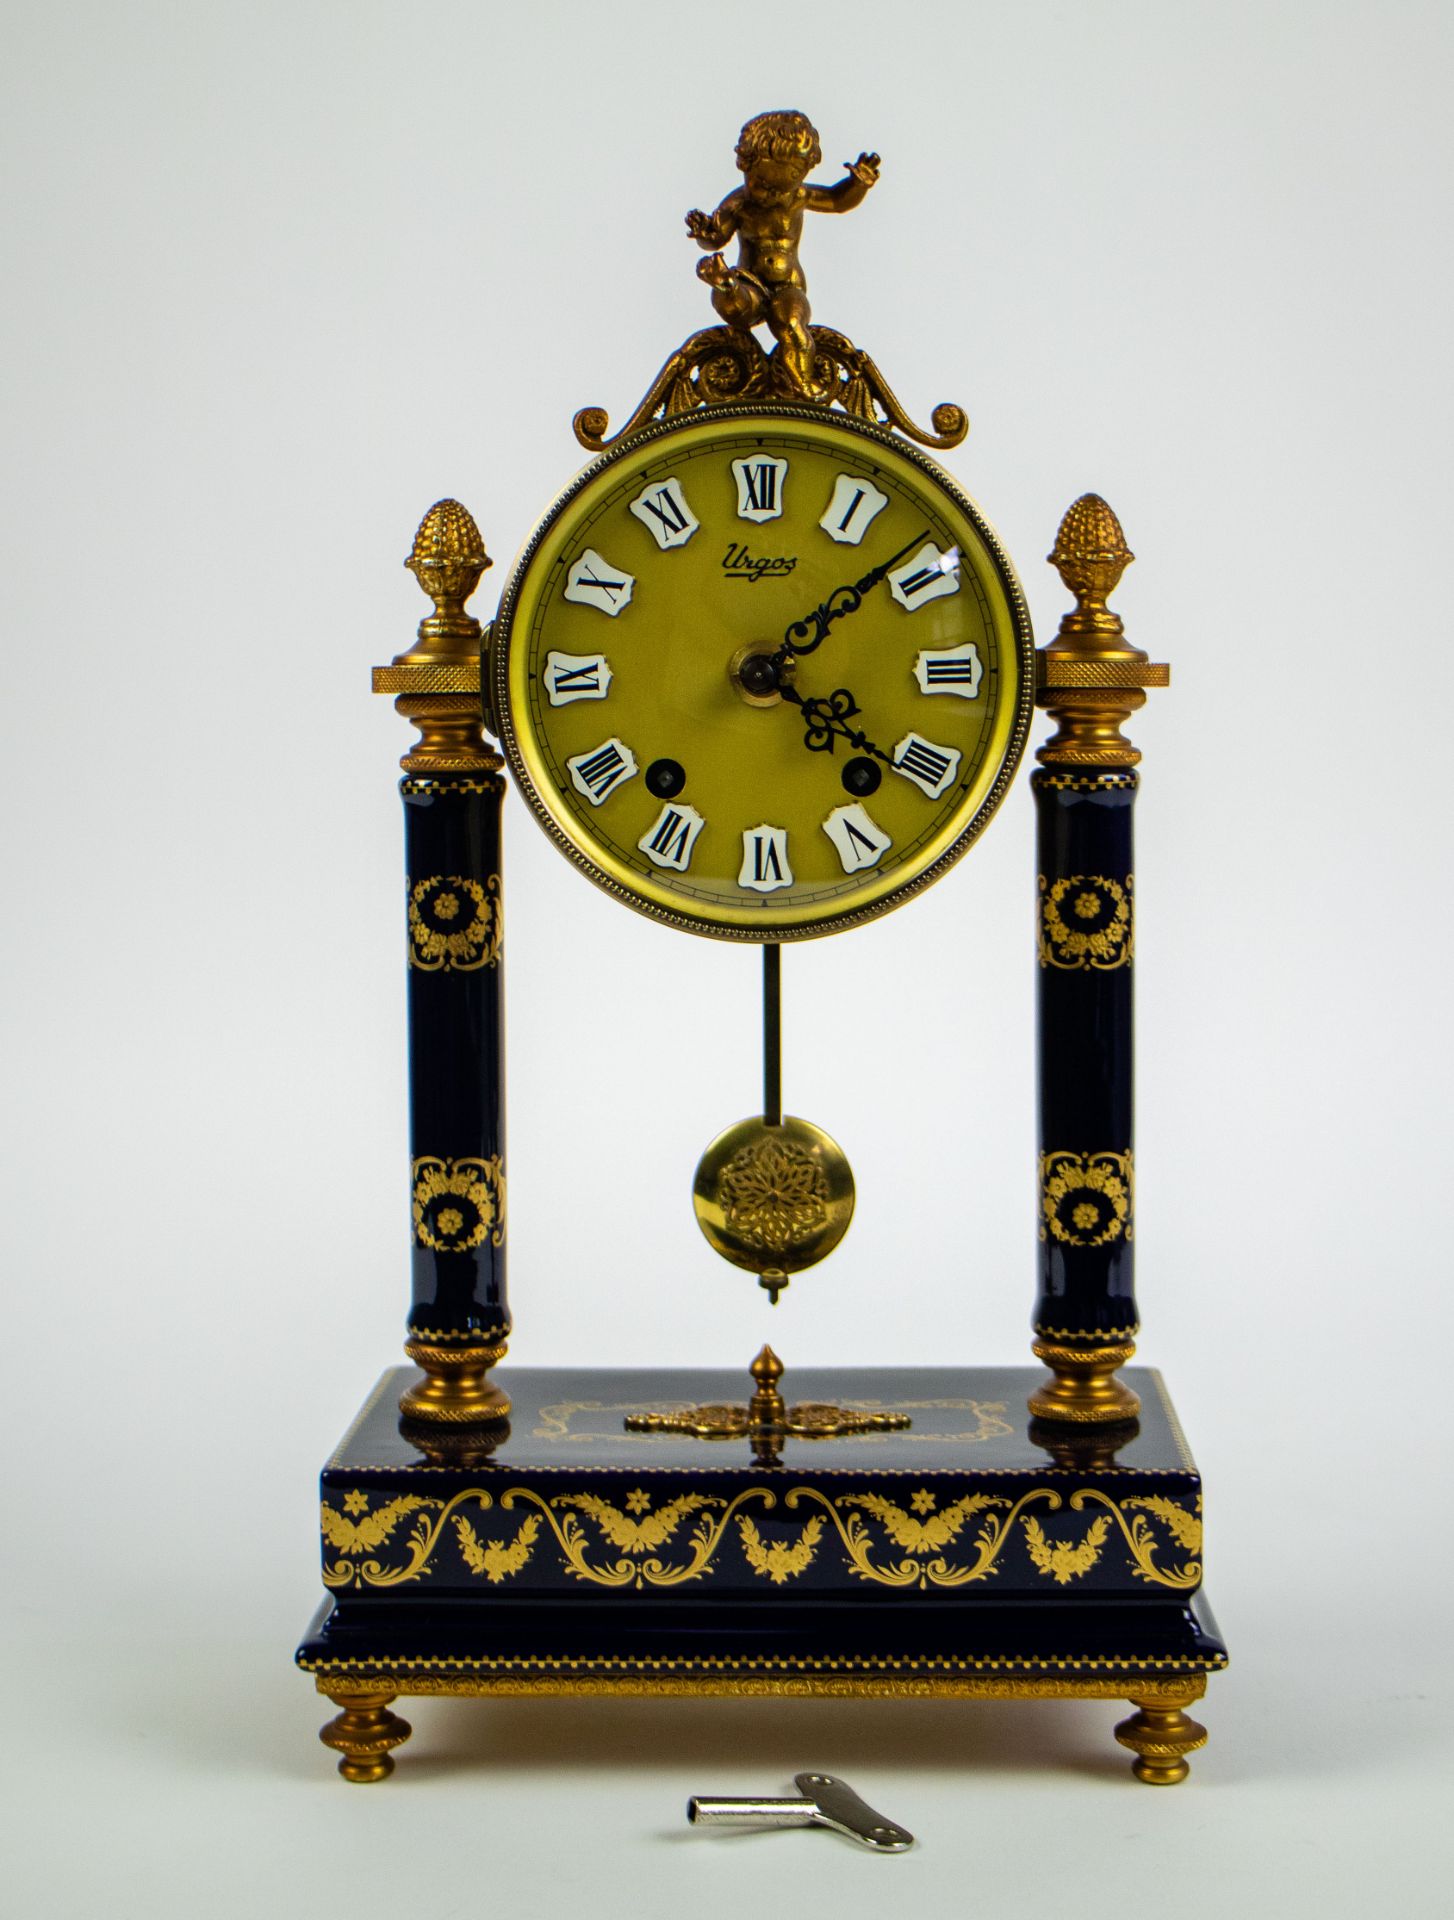 A decorative column clock 'Urgos'